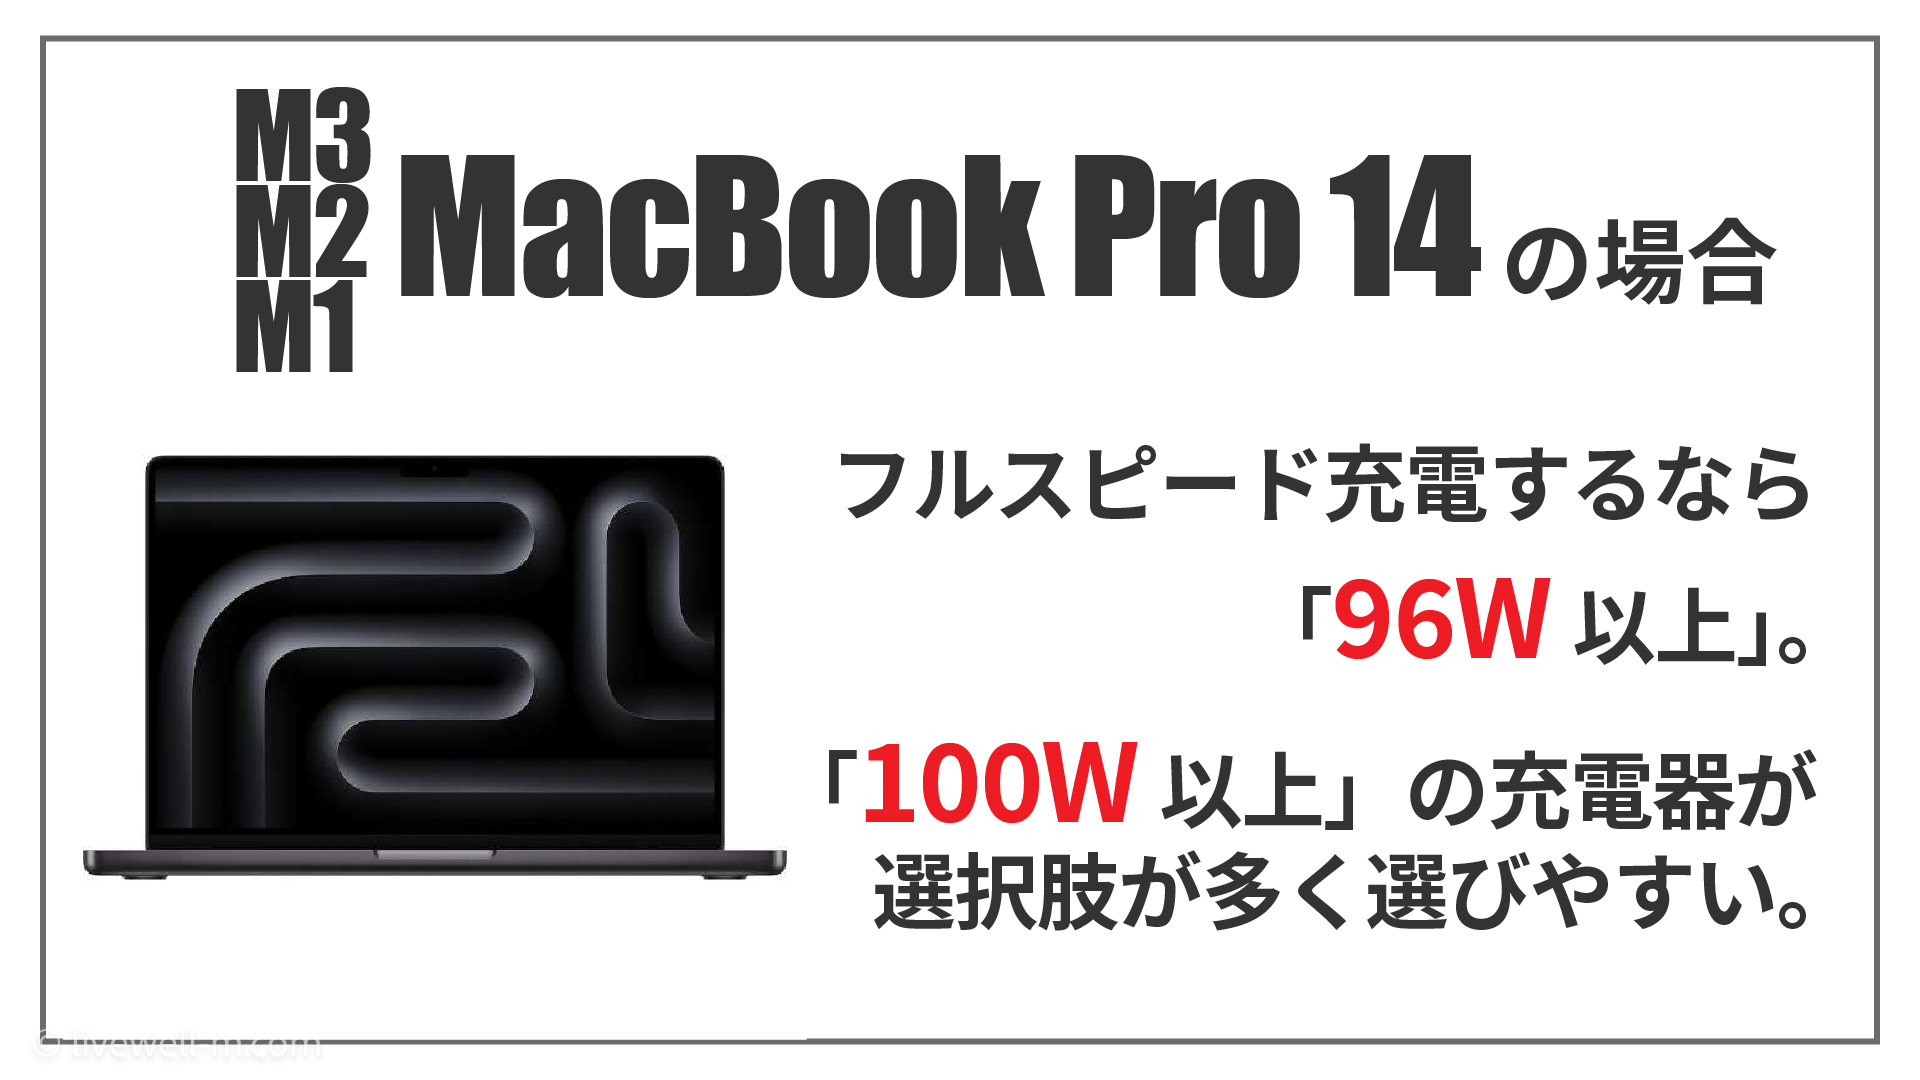 M3/M2/M1 MacBook Pro 14インチの場合